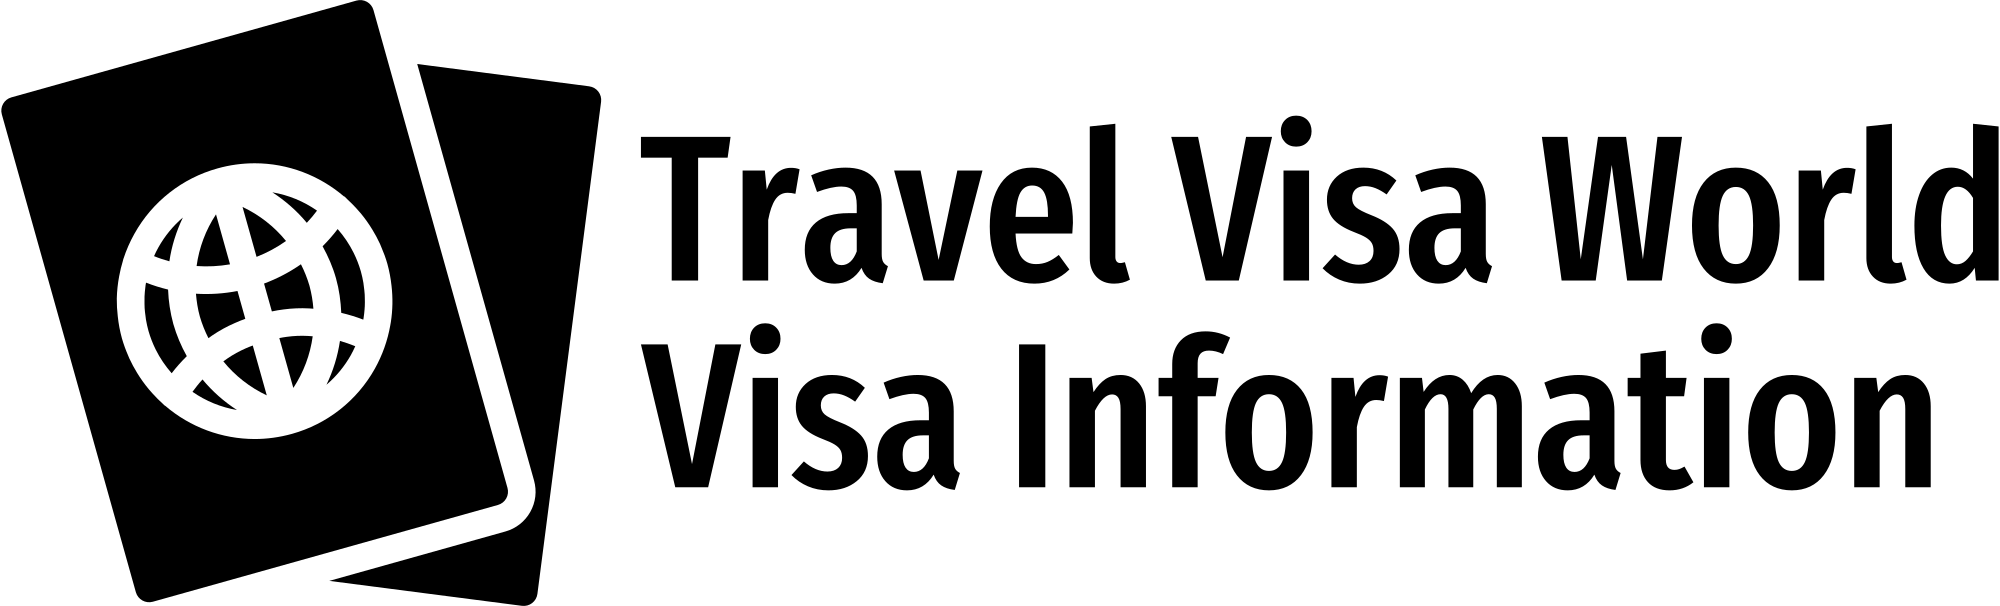 Travel Visa World